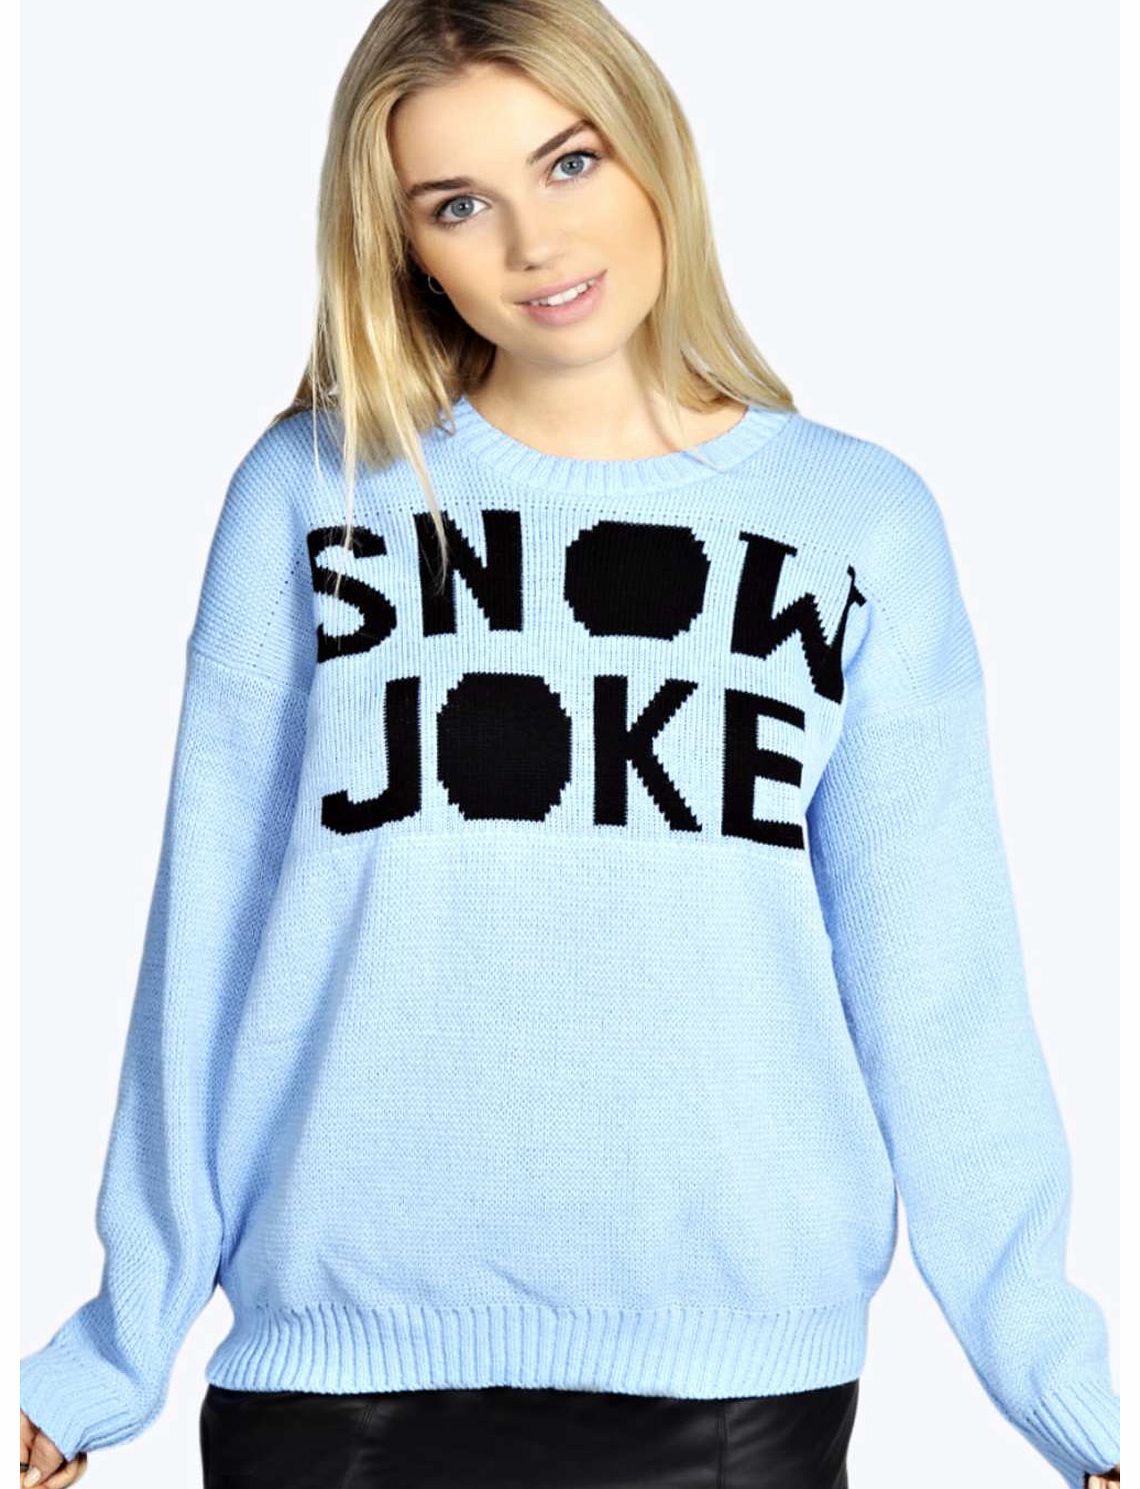 Jenny Snow Joke Christmas Jumper - blue azz17368